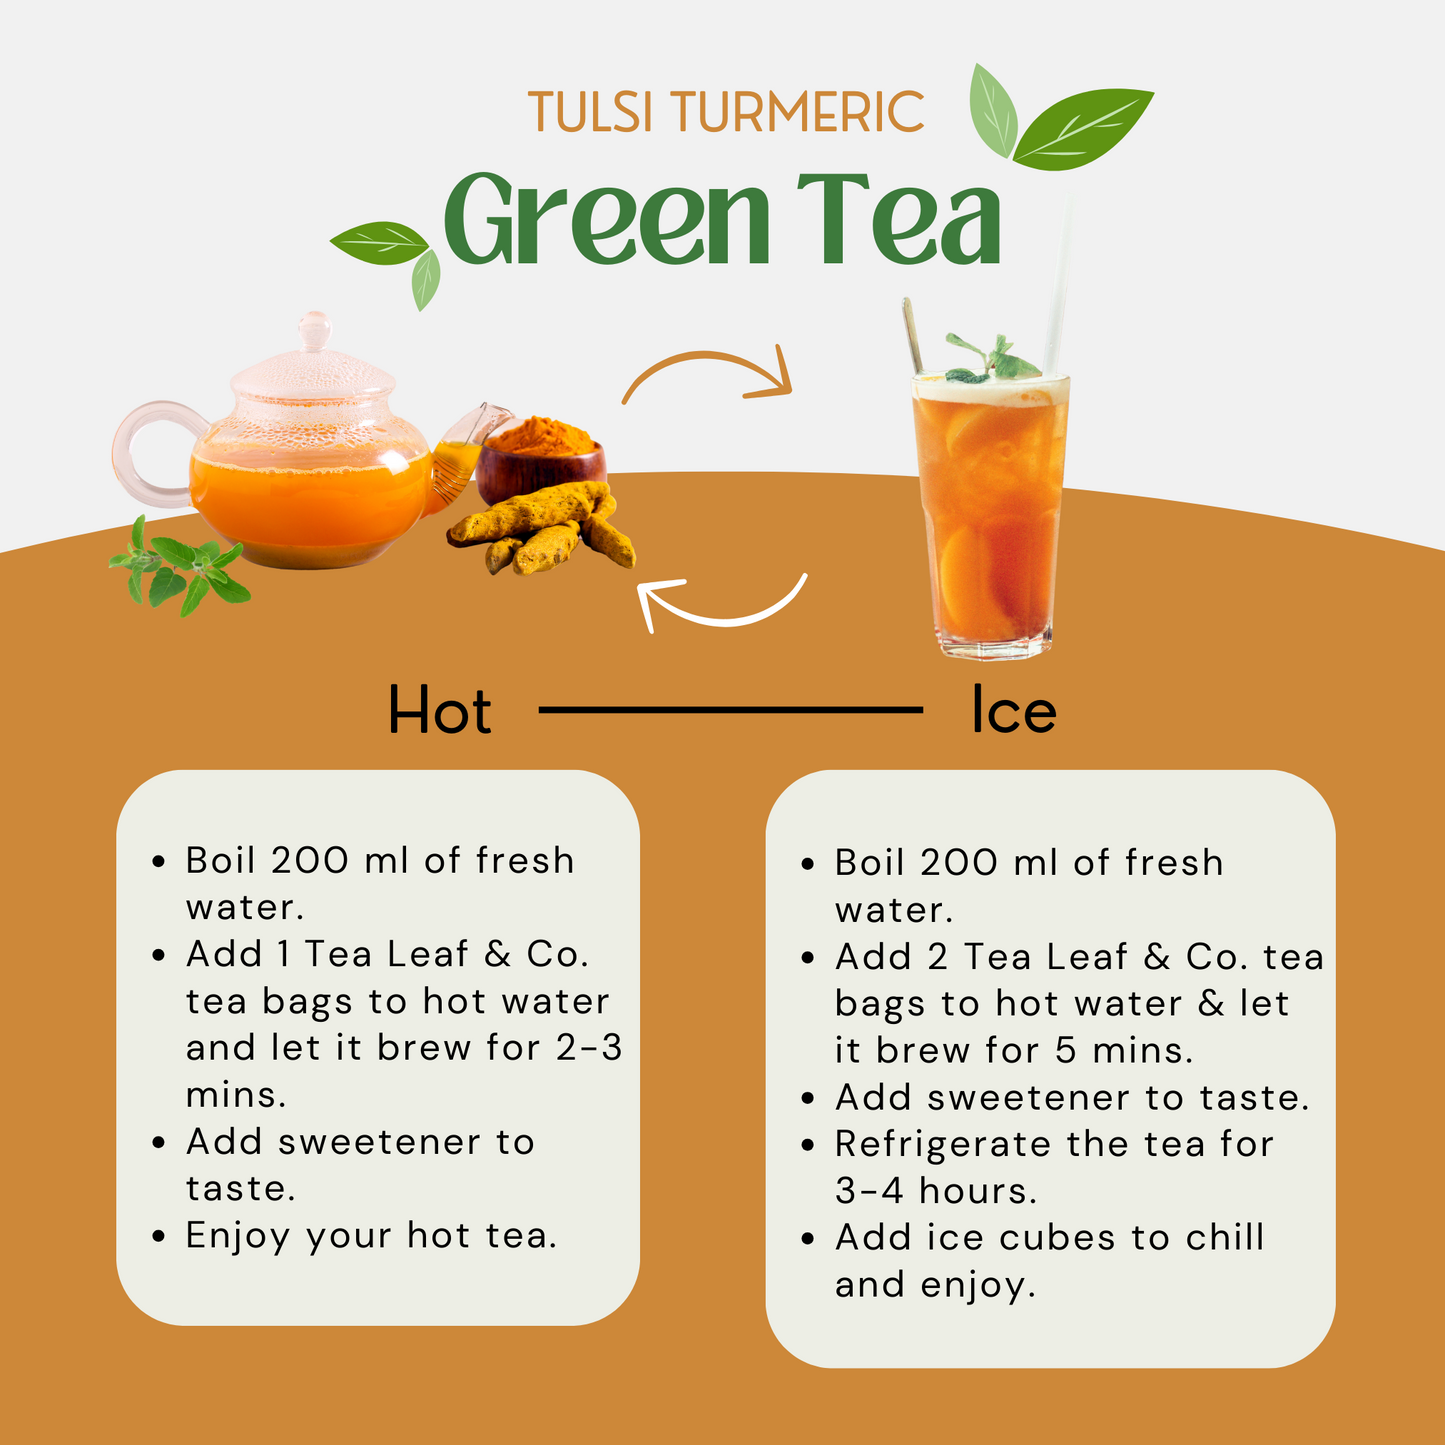 Turmeric Tulsi Green Tea (Pack of 2) - 30 Pyramid Tea Bags